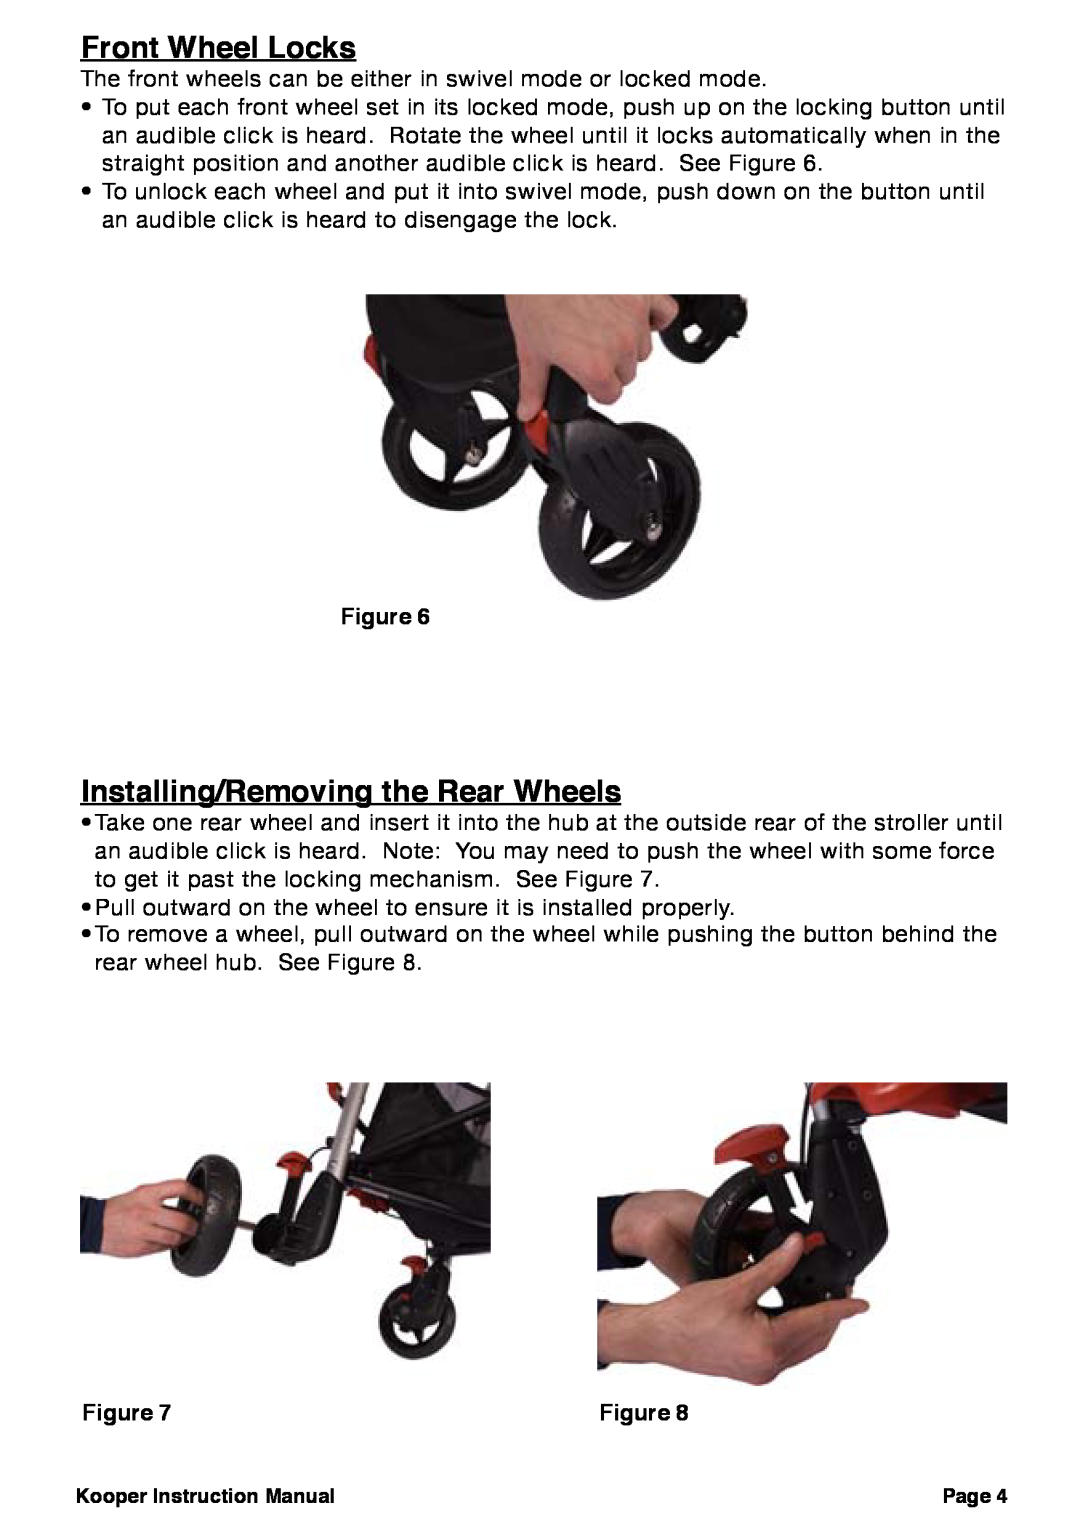 Joovy 30X Series, Joovy Kooper manual Front Wheel Locks, Installing/Removing the Rear Wheels 